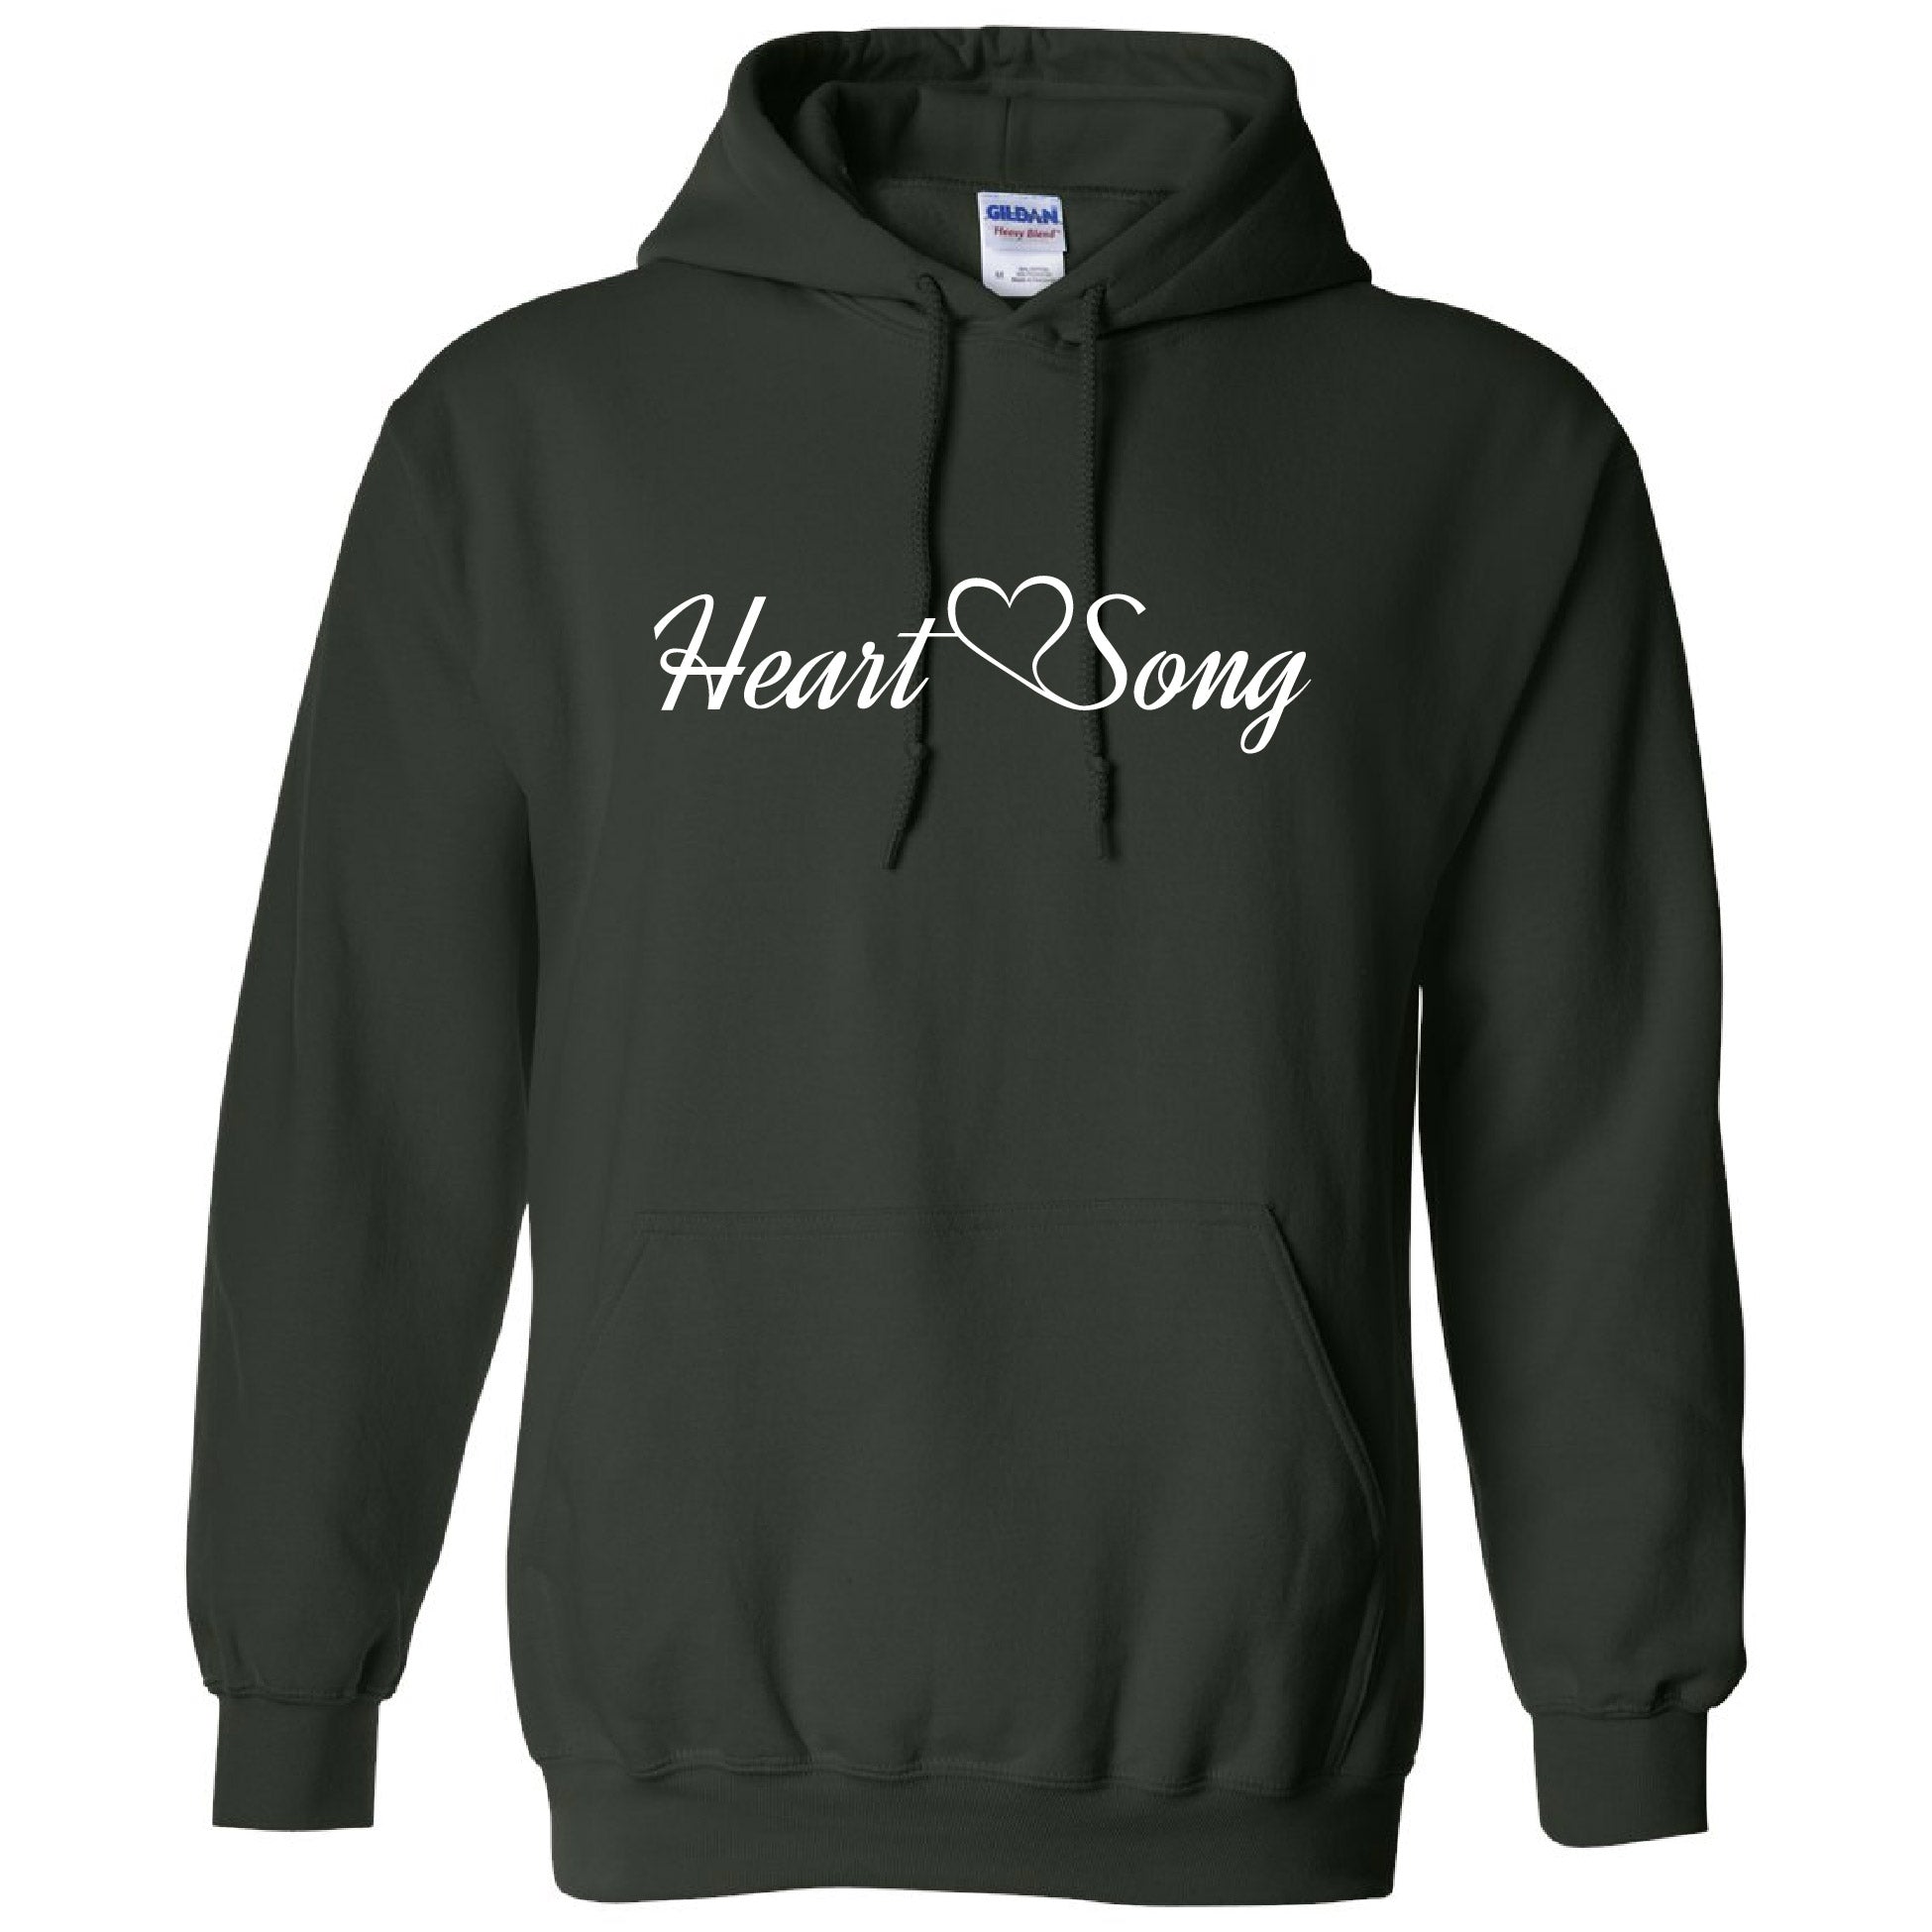 Heart Song Hooded Sweatshirt